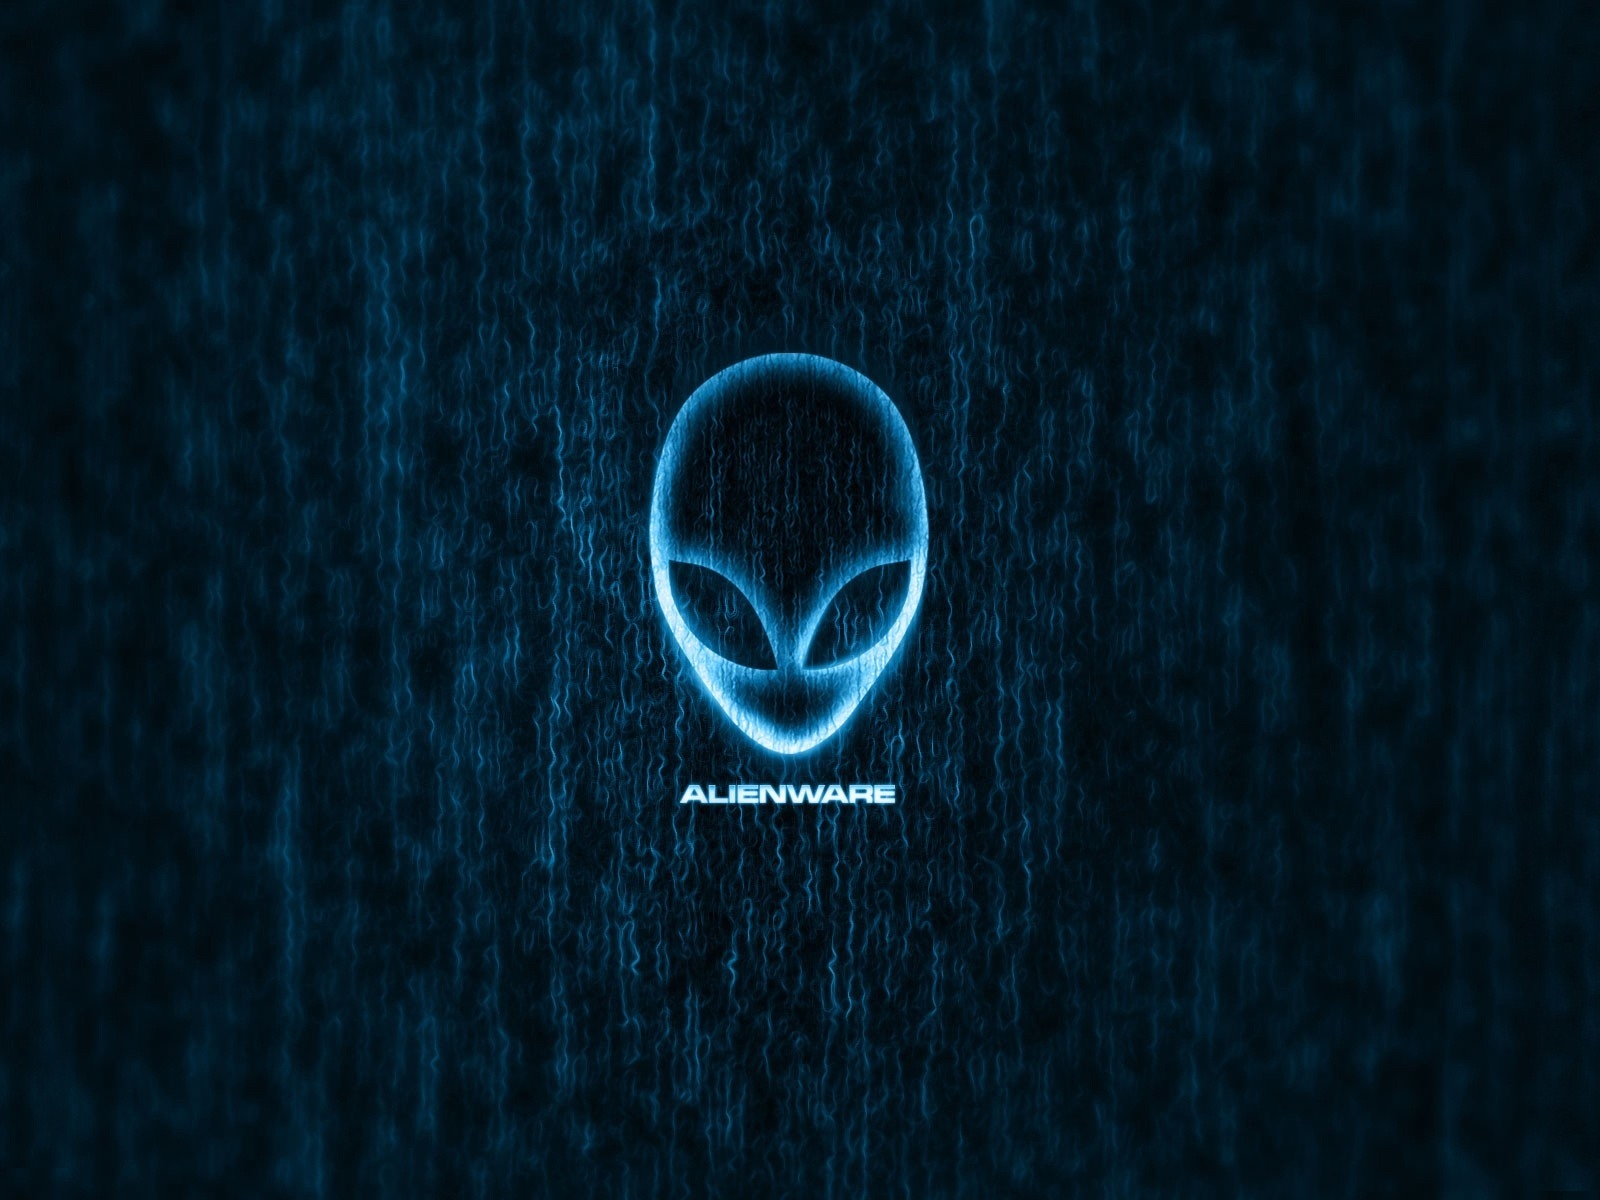 Alienware Company Logo for 1600 x 1200 resolution